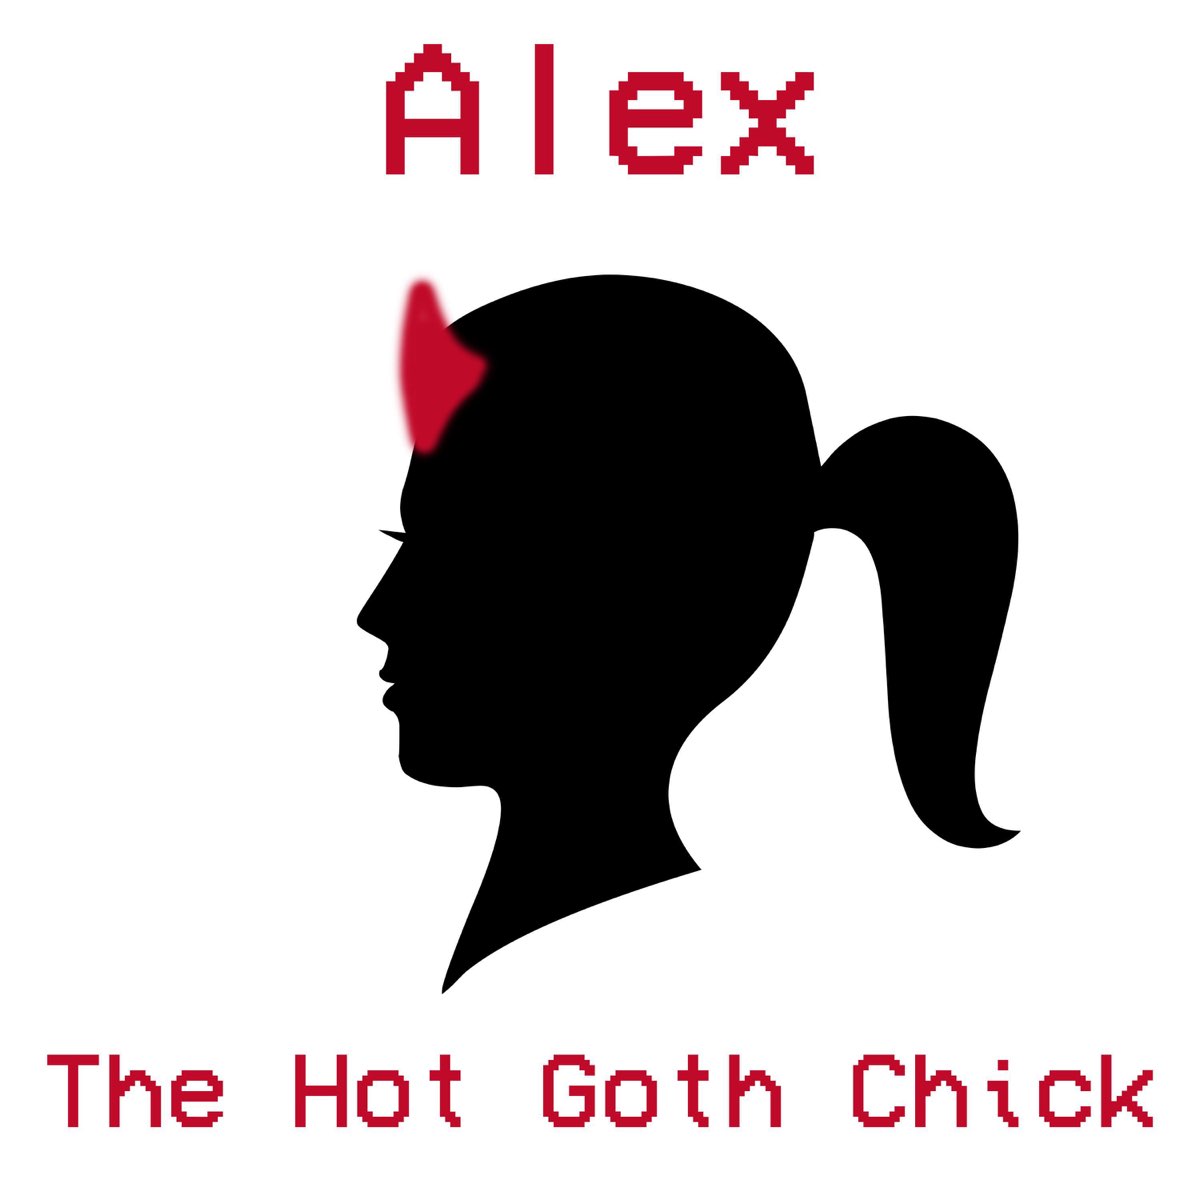 Hot goth chick in the bath